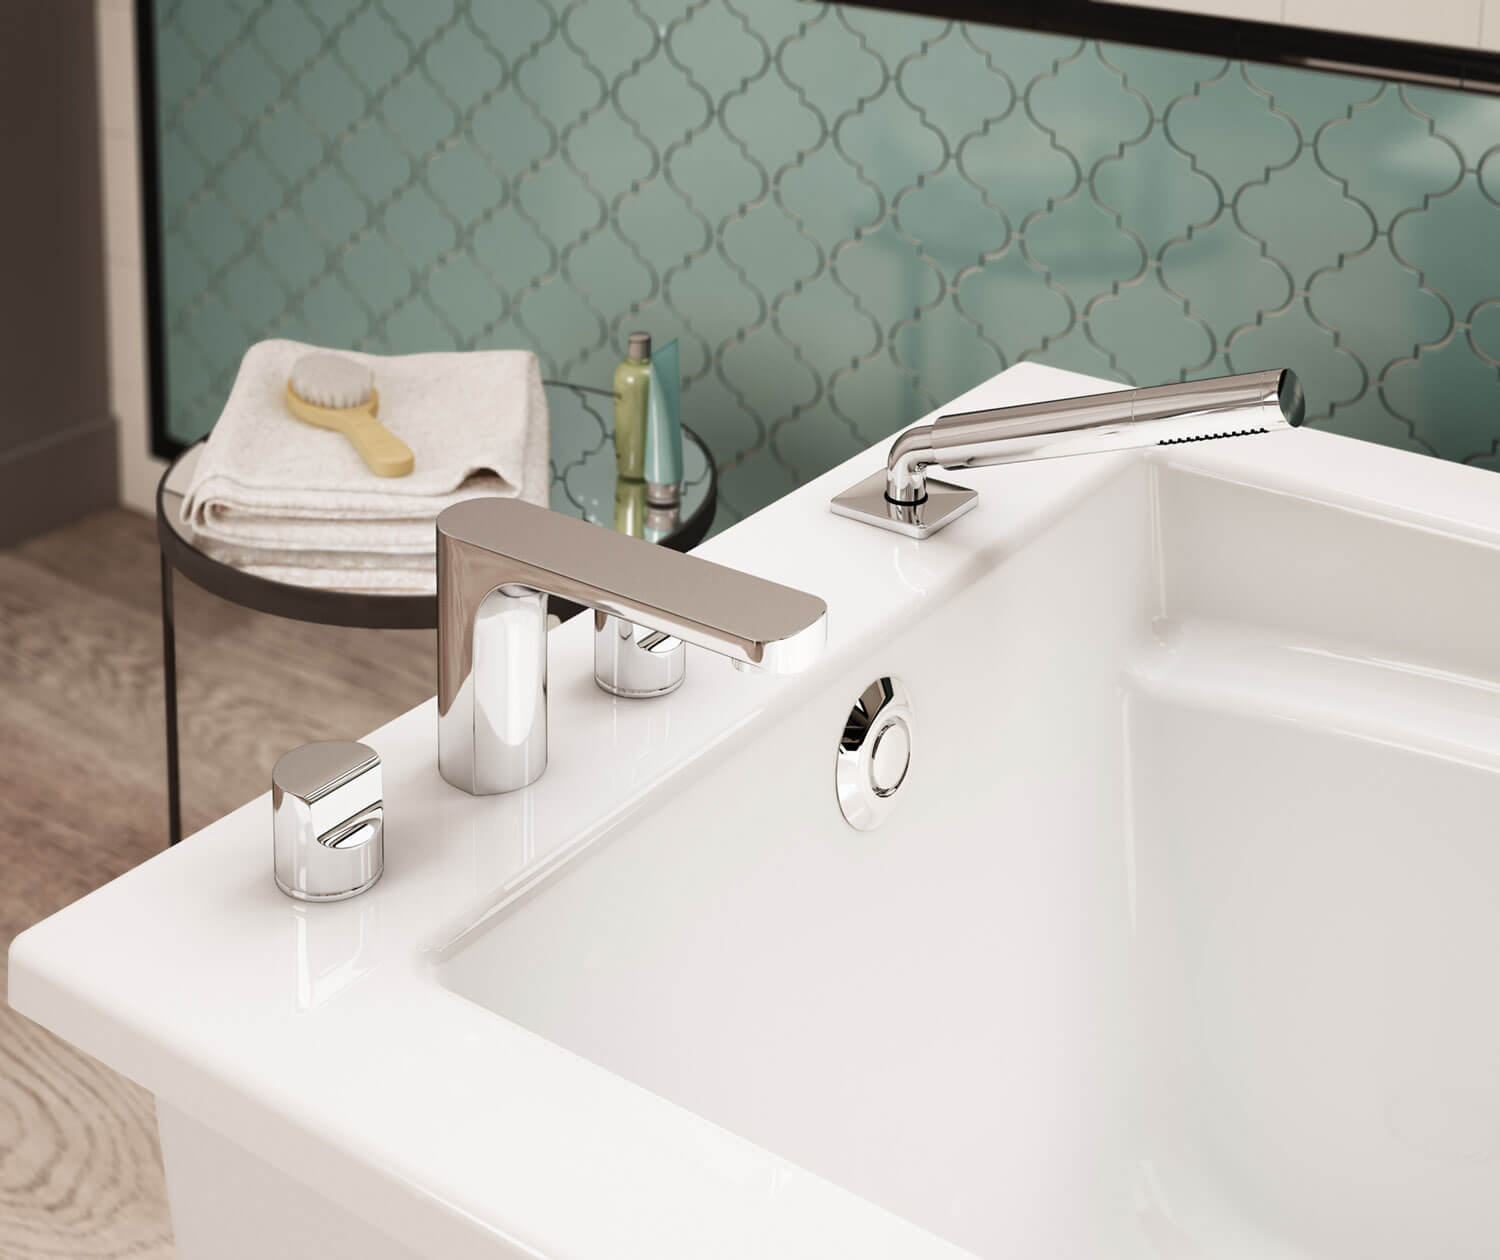 Optik 6032 F End | Maax Acrylic Bath, with in Bathtub en Skirt Drain Aerofeel Freestanding White White